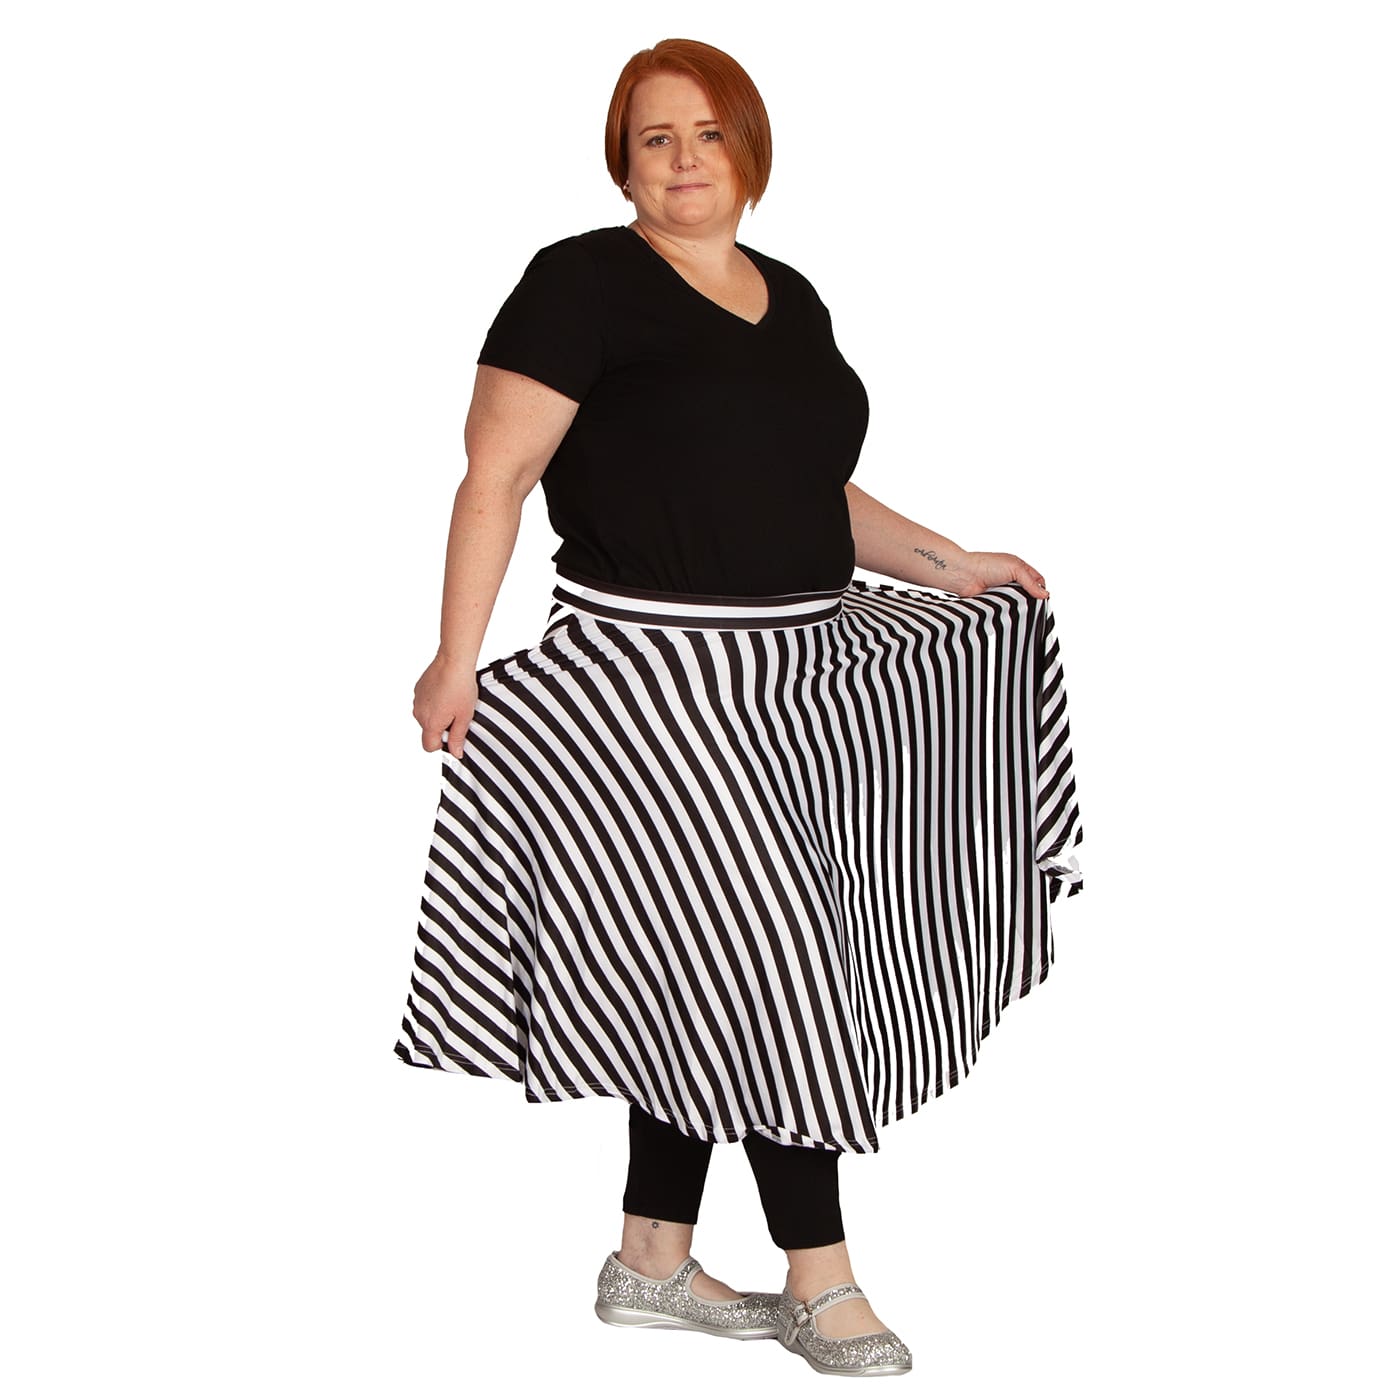 Zebra Swishy Skirt by RainbowsAndFairies.com.au (Black & White - Stripes - Monochrome - Classic - Circle Skirt With Pockets - Mod Retro - Animal Print) - SKU: CL_SWISH_ZEBRA_ORG - Pic-08